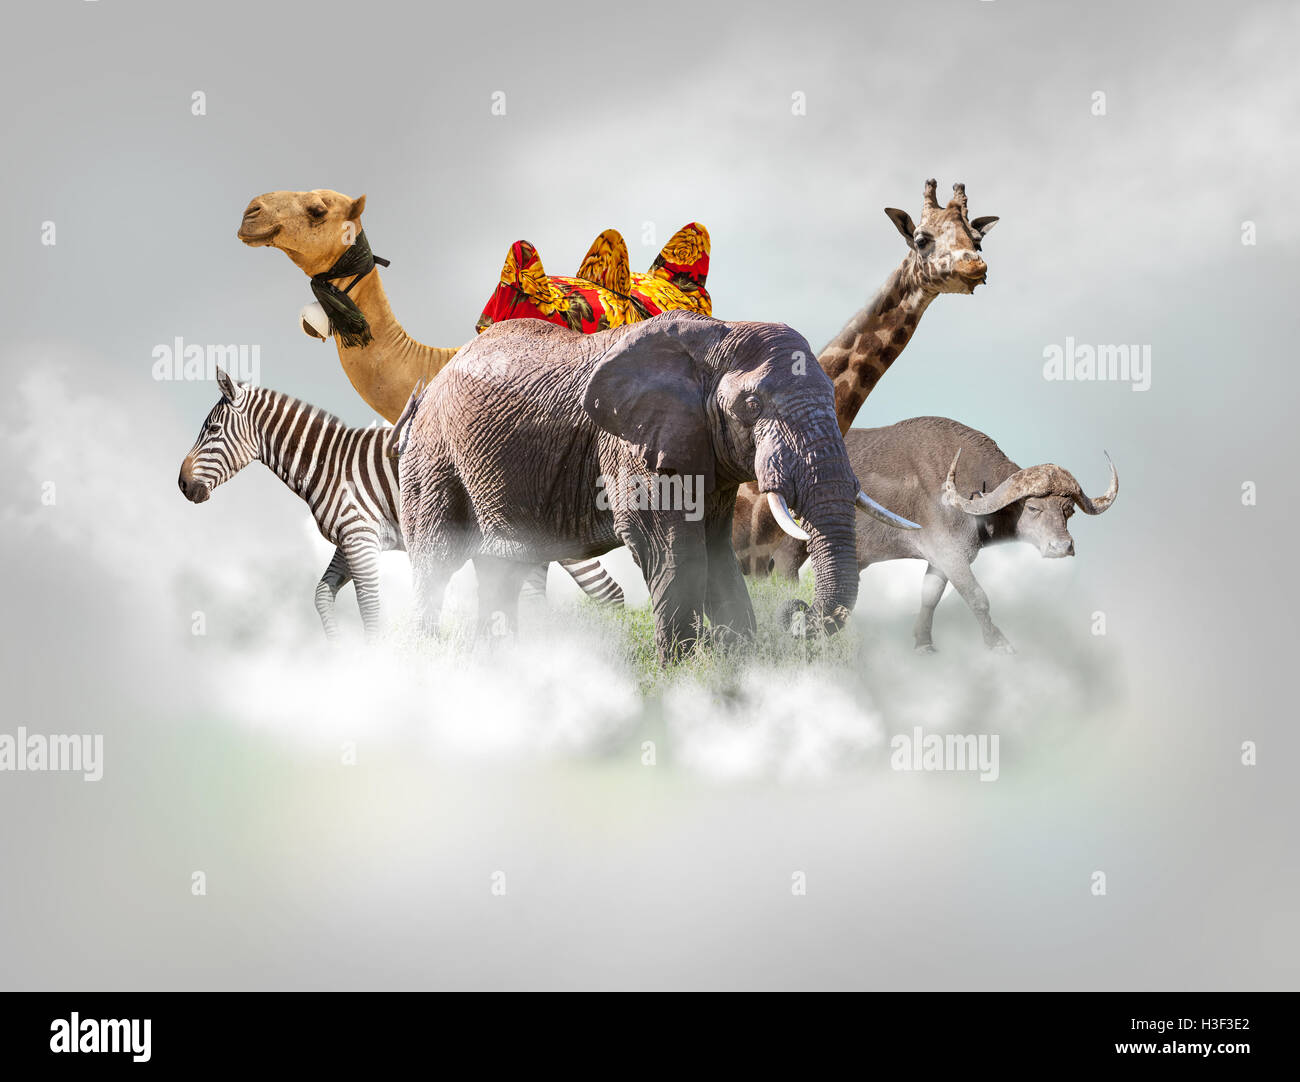 Wild animals group - giraffe, elephant, zebra above white clouds in gray sky Stock Photo